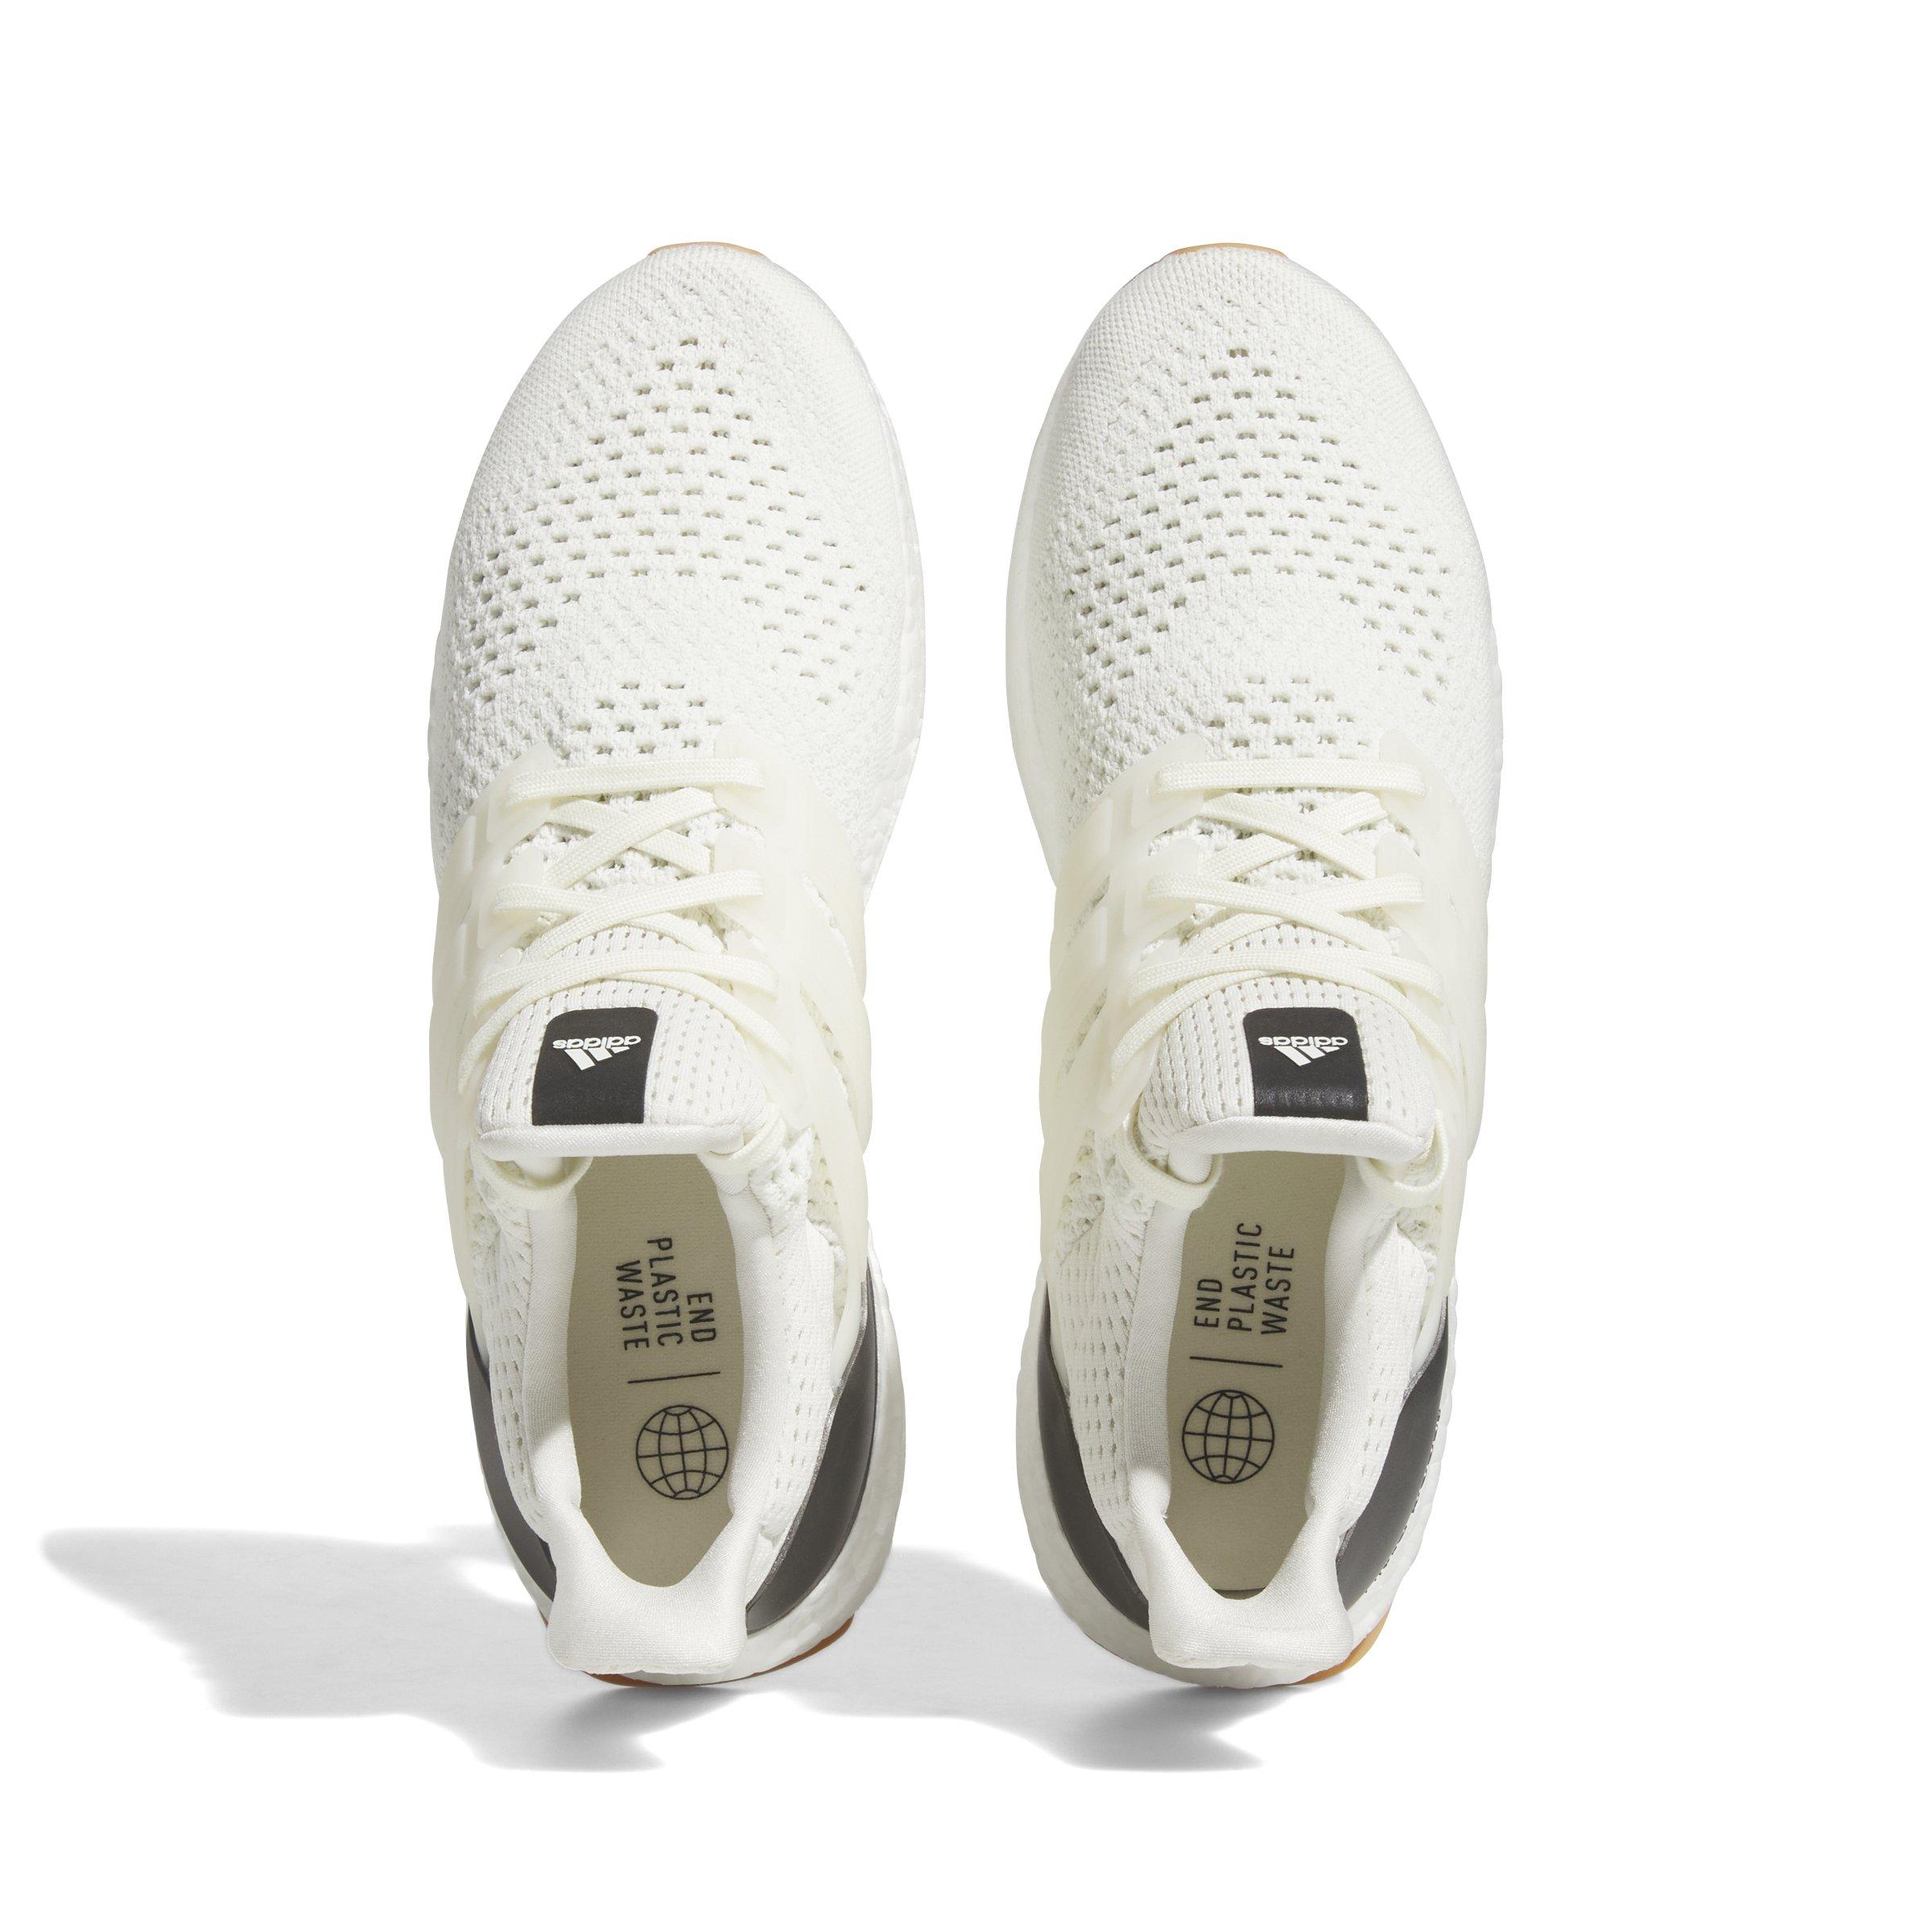 Nike Mens Tech Fleece Hoodie - Black, Adidas performance Ultraboost 1.0  DNA